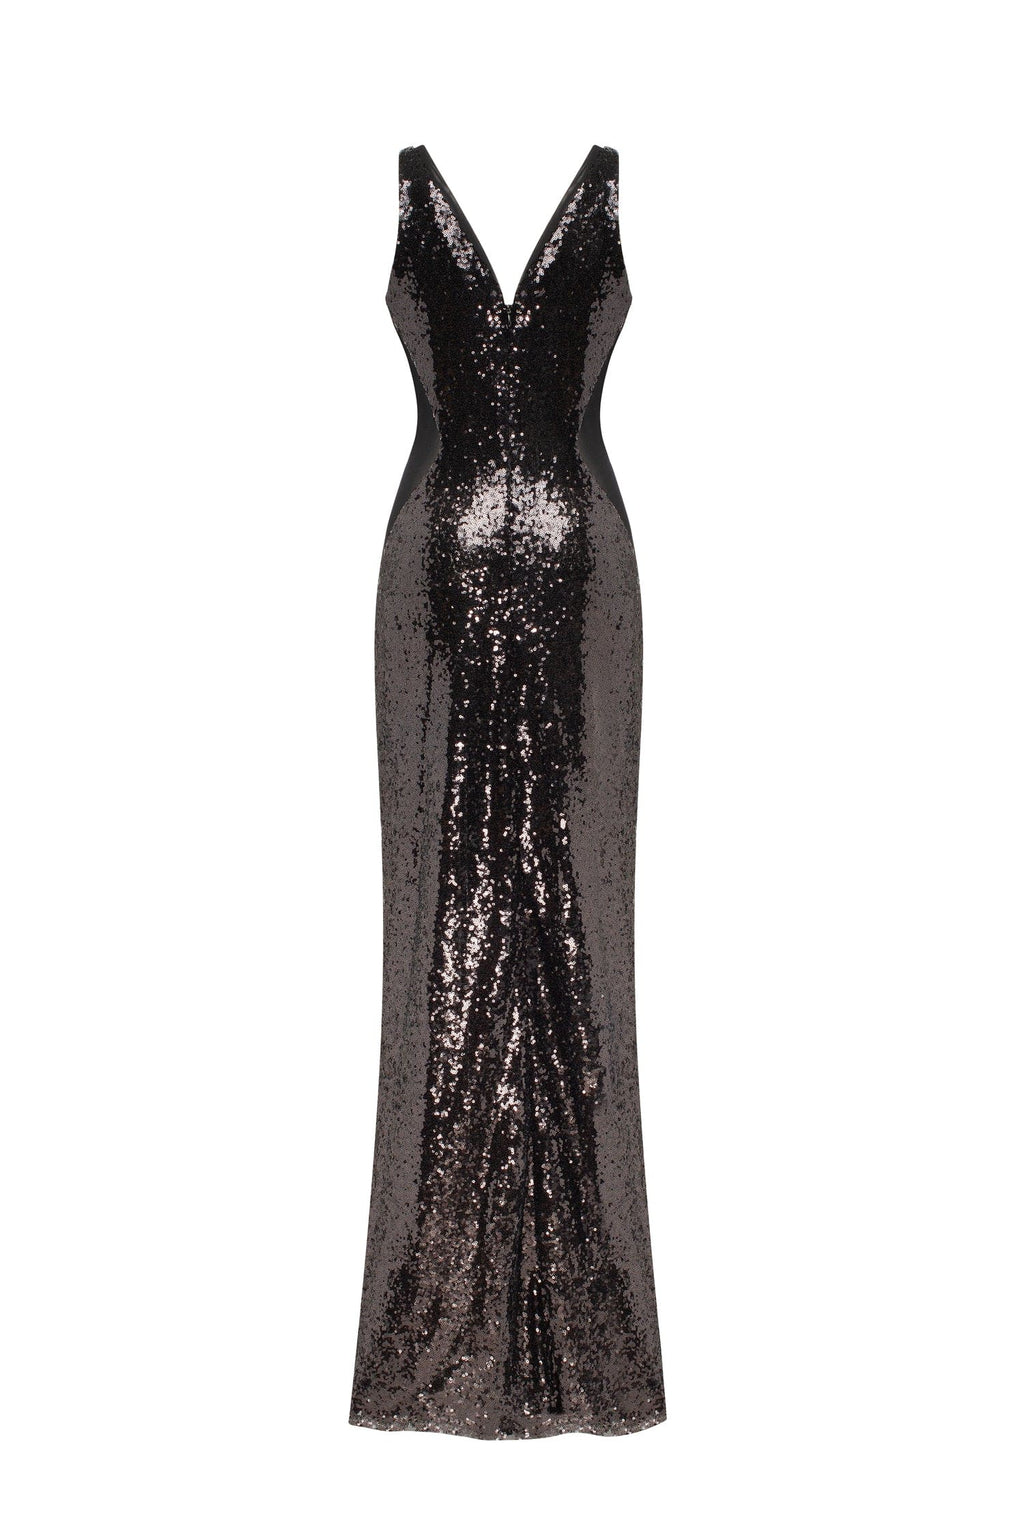 Dazzling fully sequined black maxi dress, Smoky Quartz